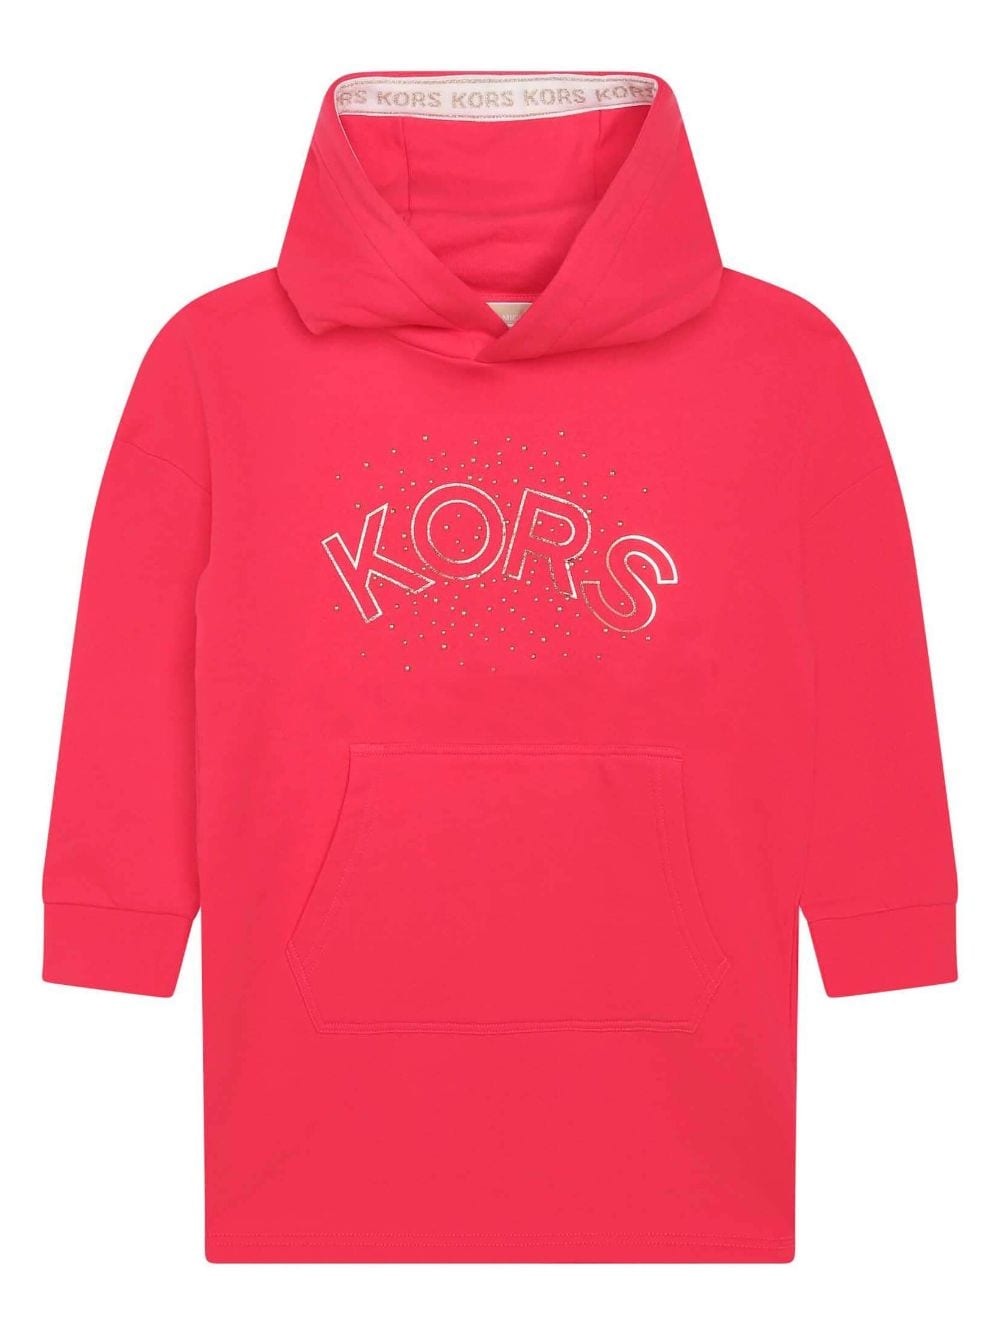 Michael Kors Kids logo-print cotton dress - Pink